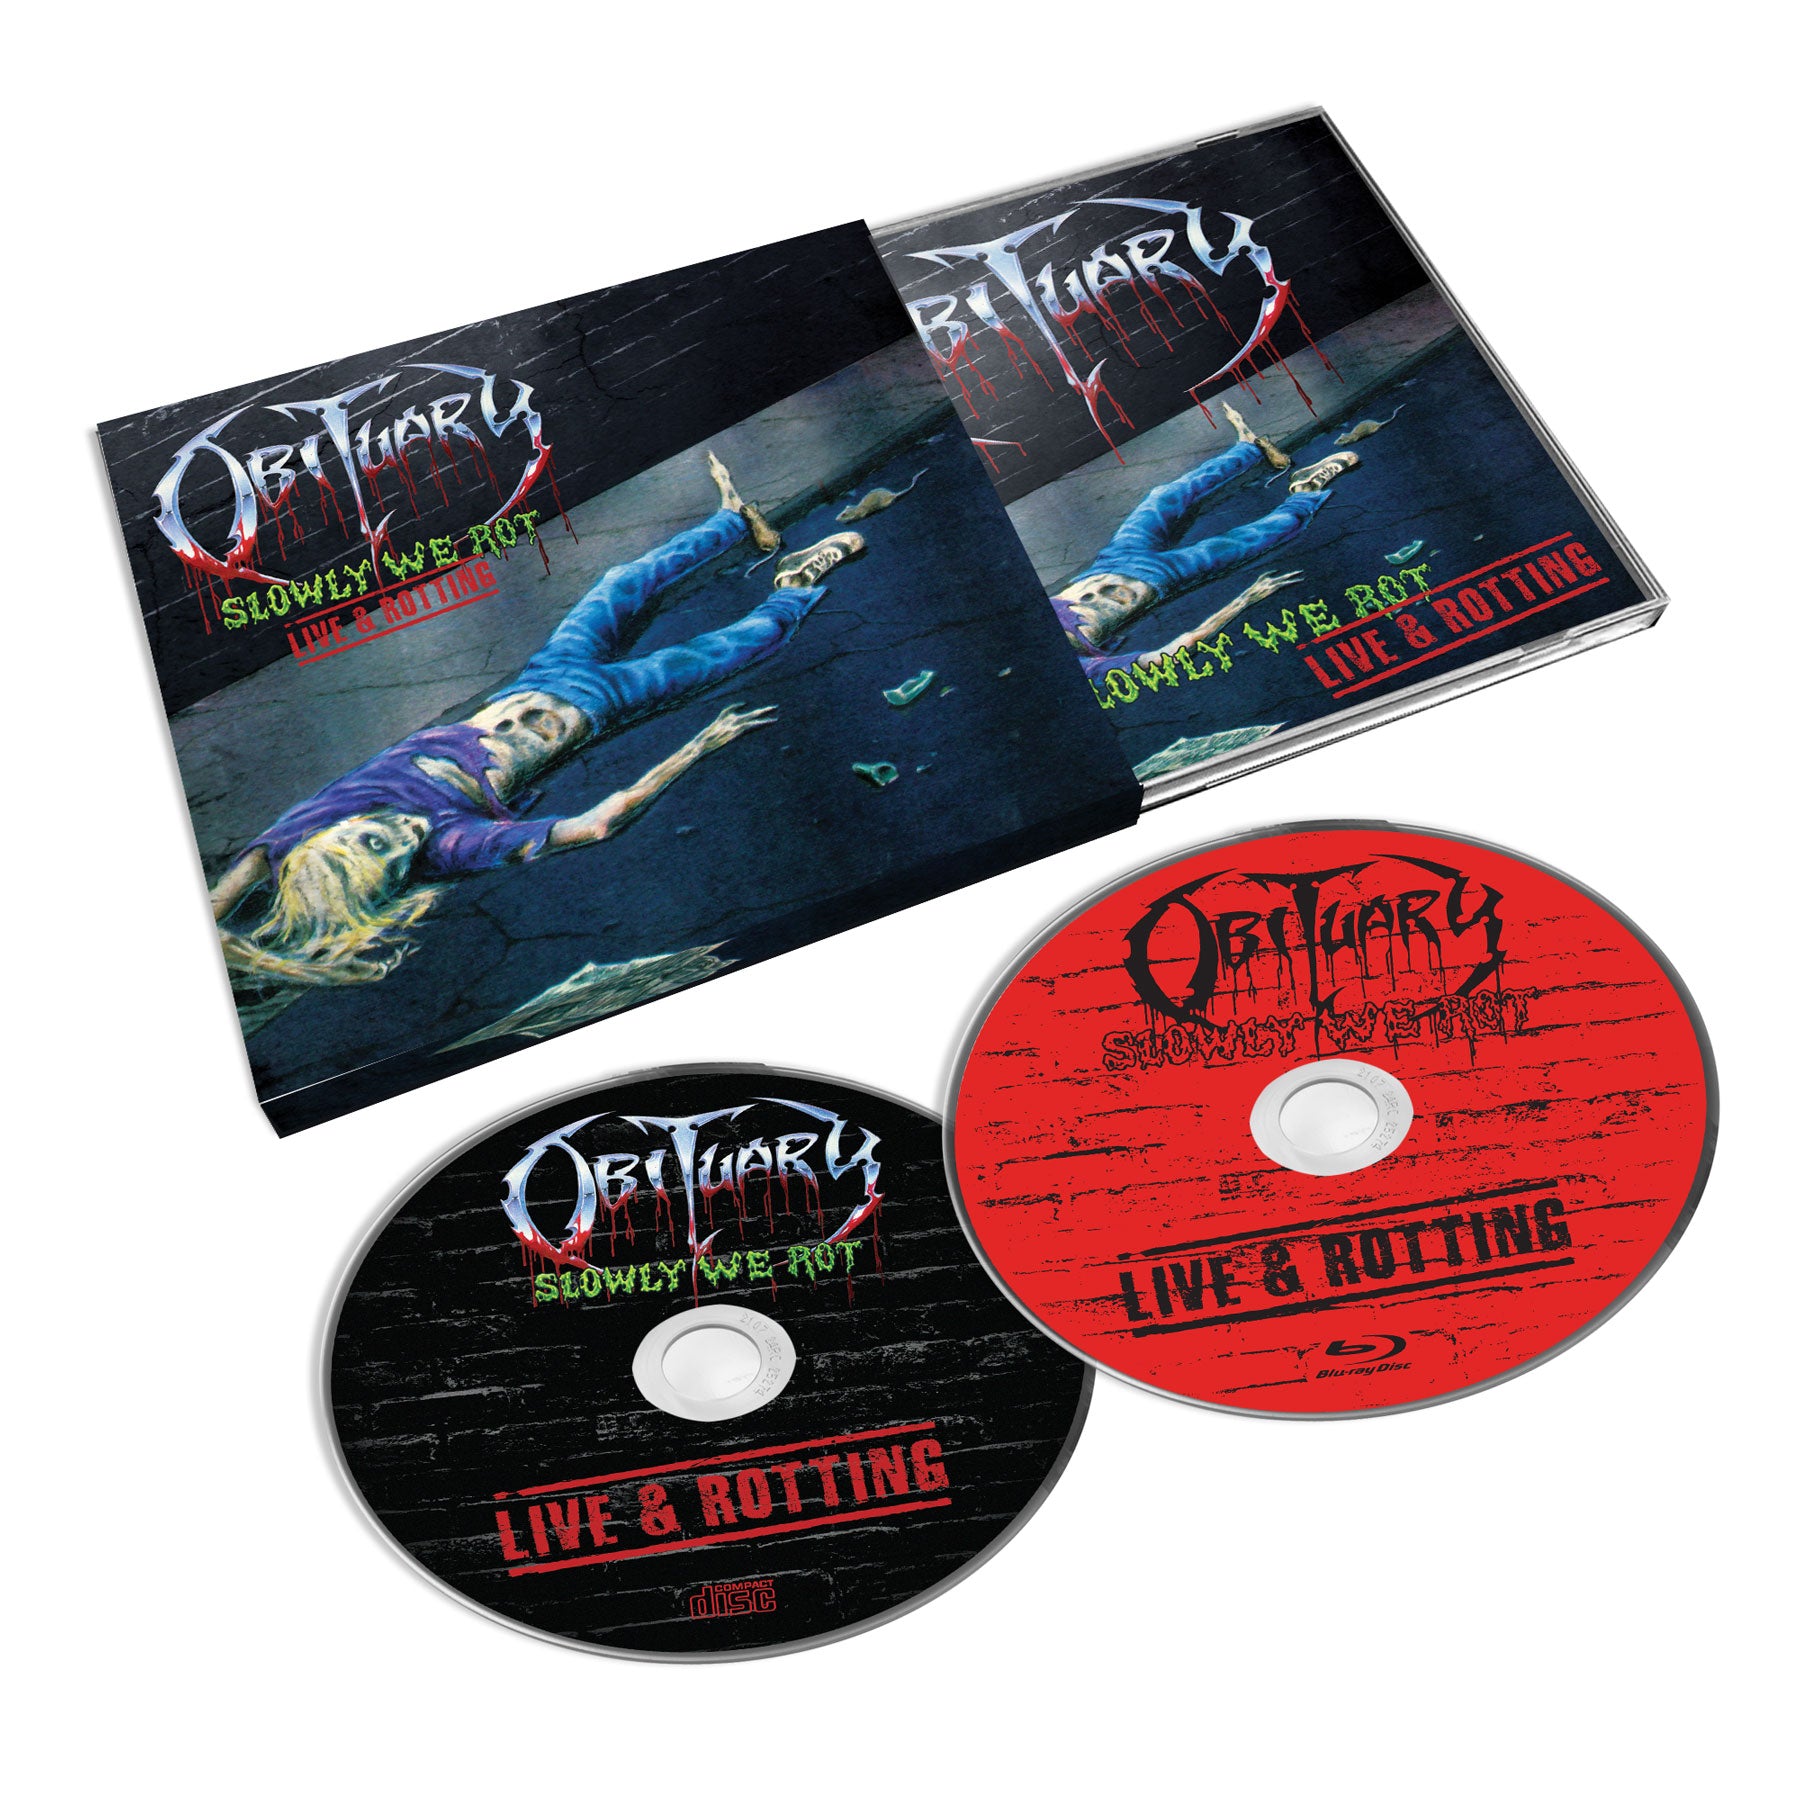 Obituary "Slowly We Rot - Live and Rotting" Blu-ray/CD